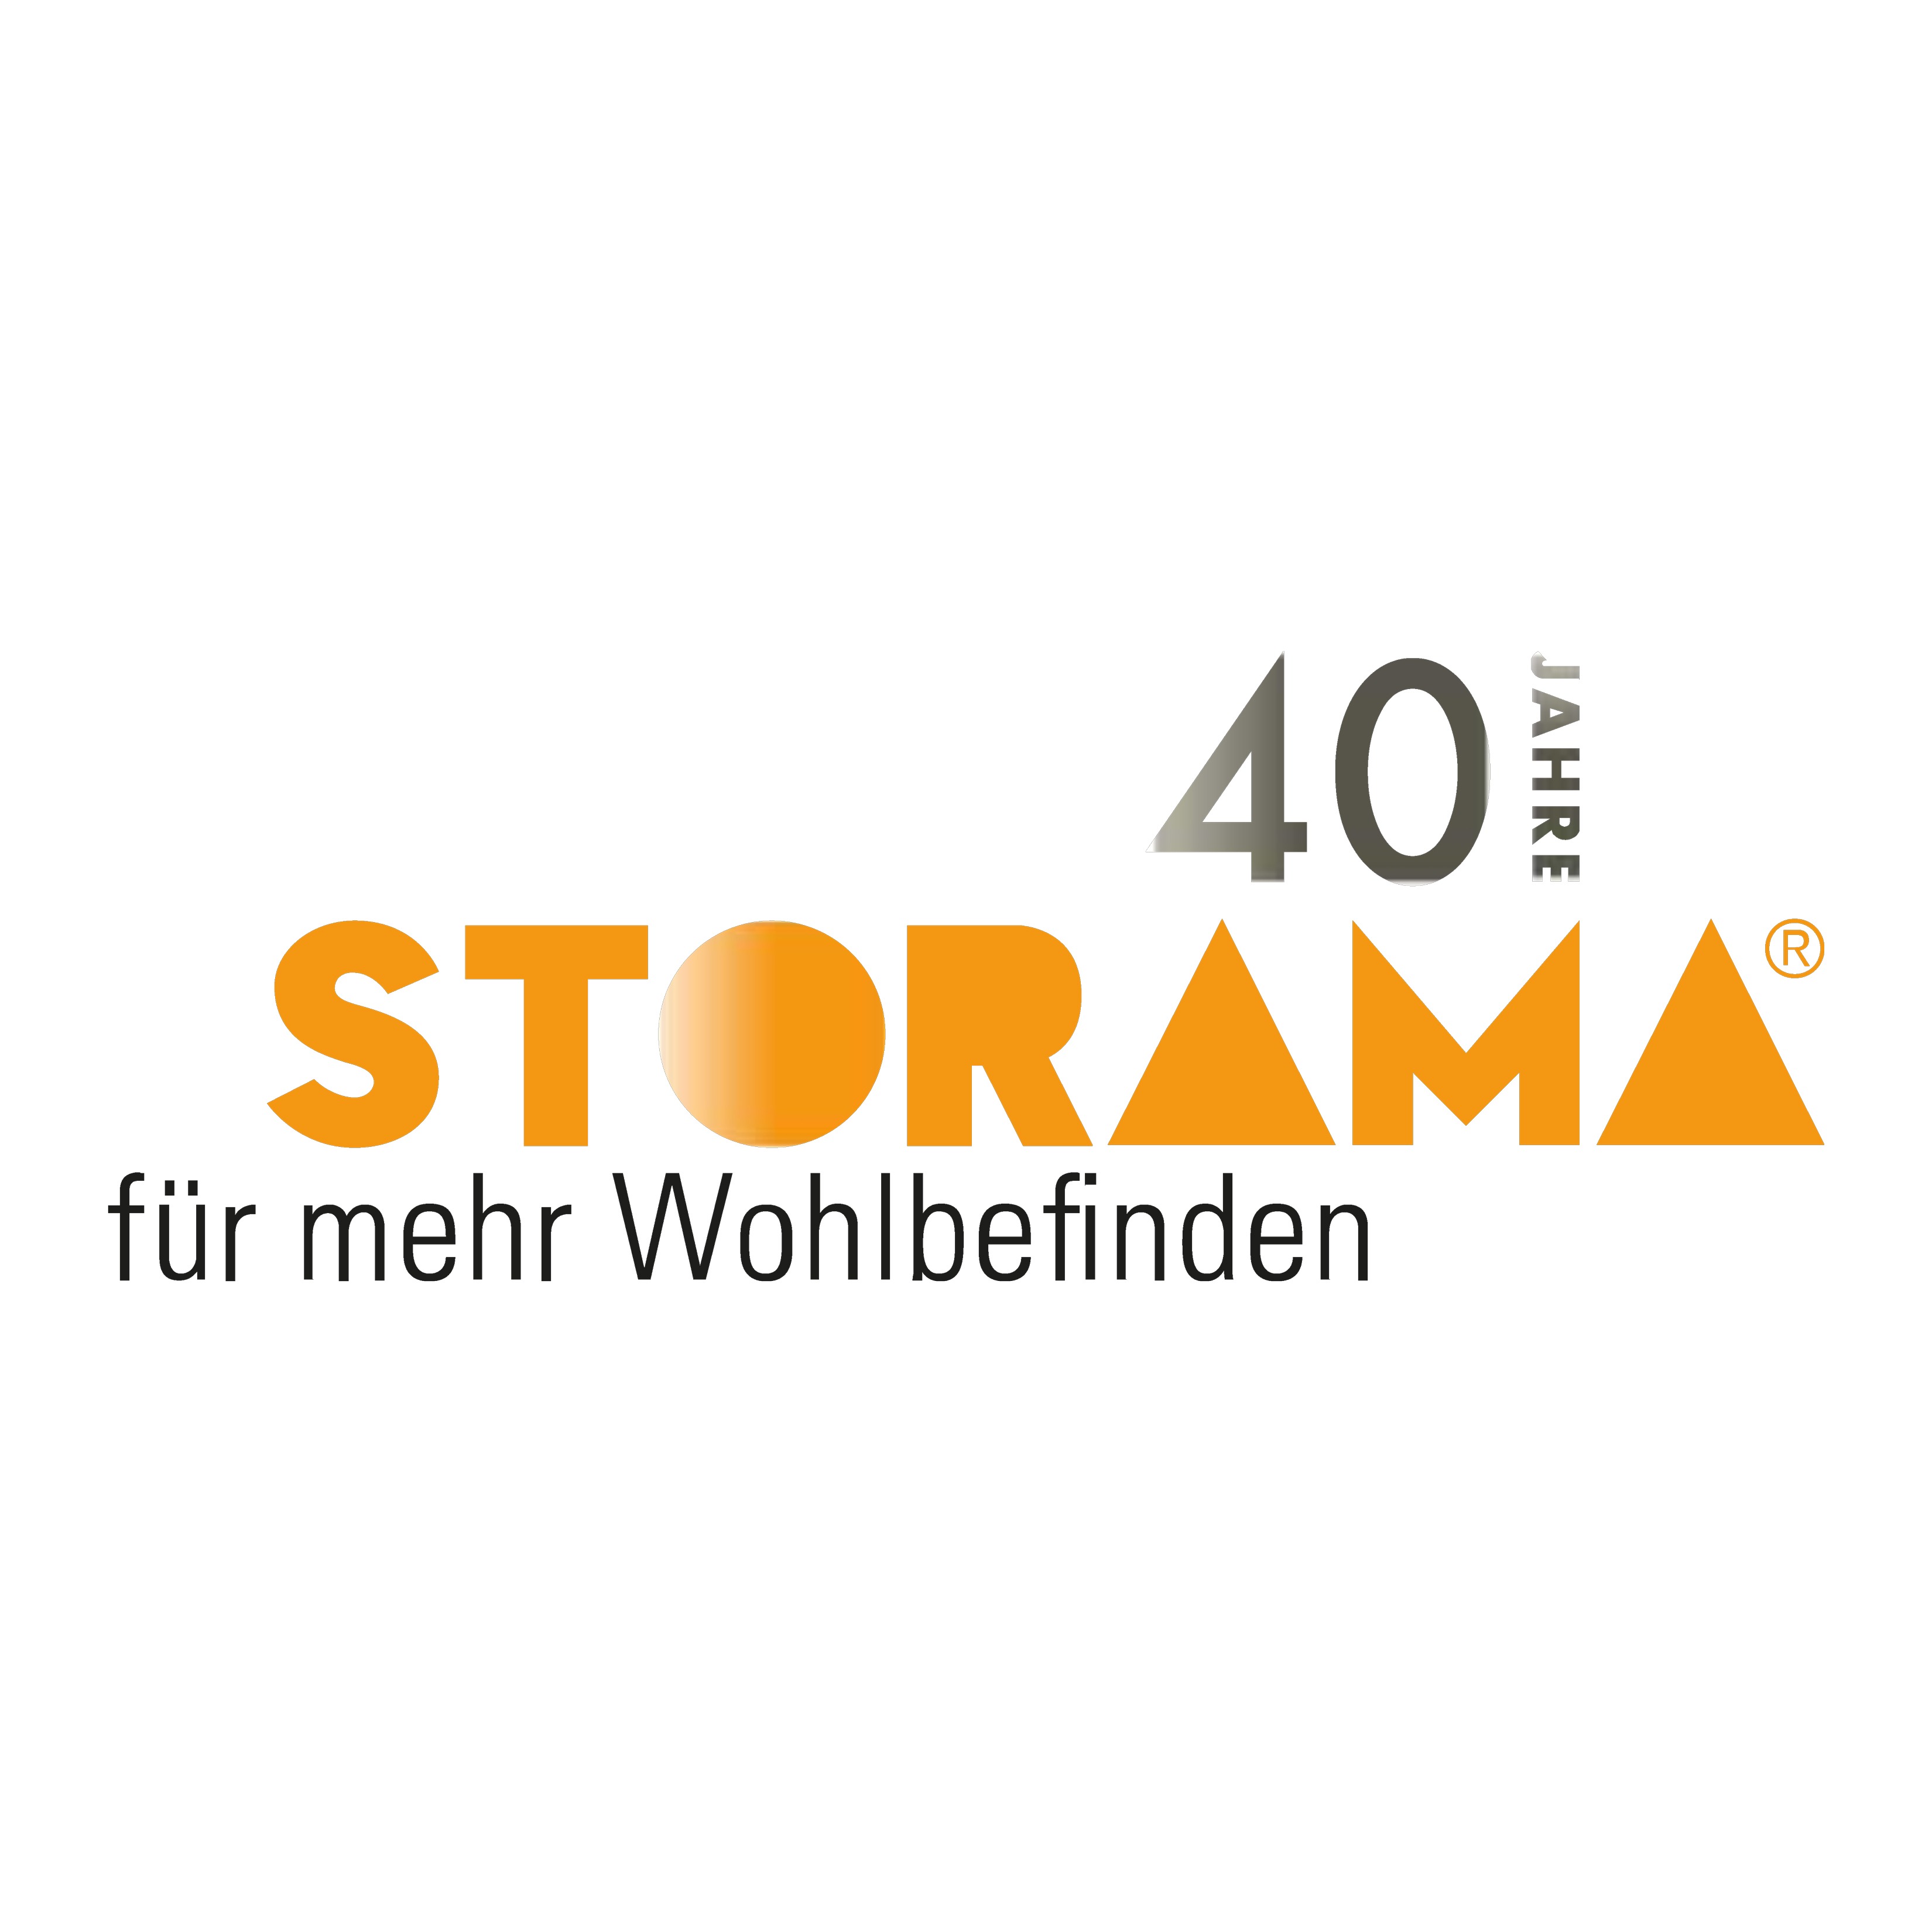 Storama AG Logo